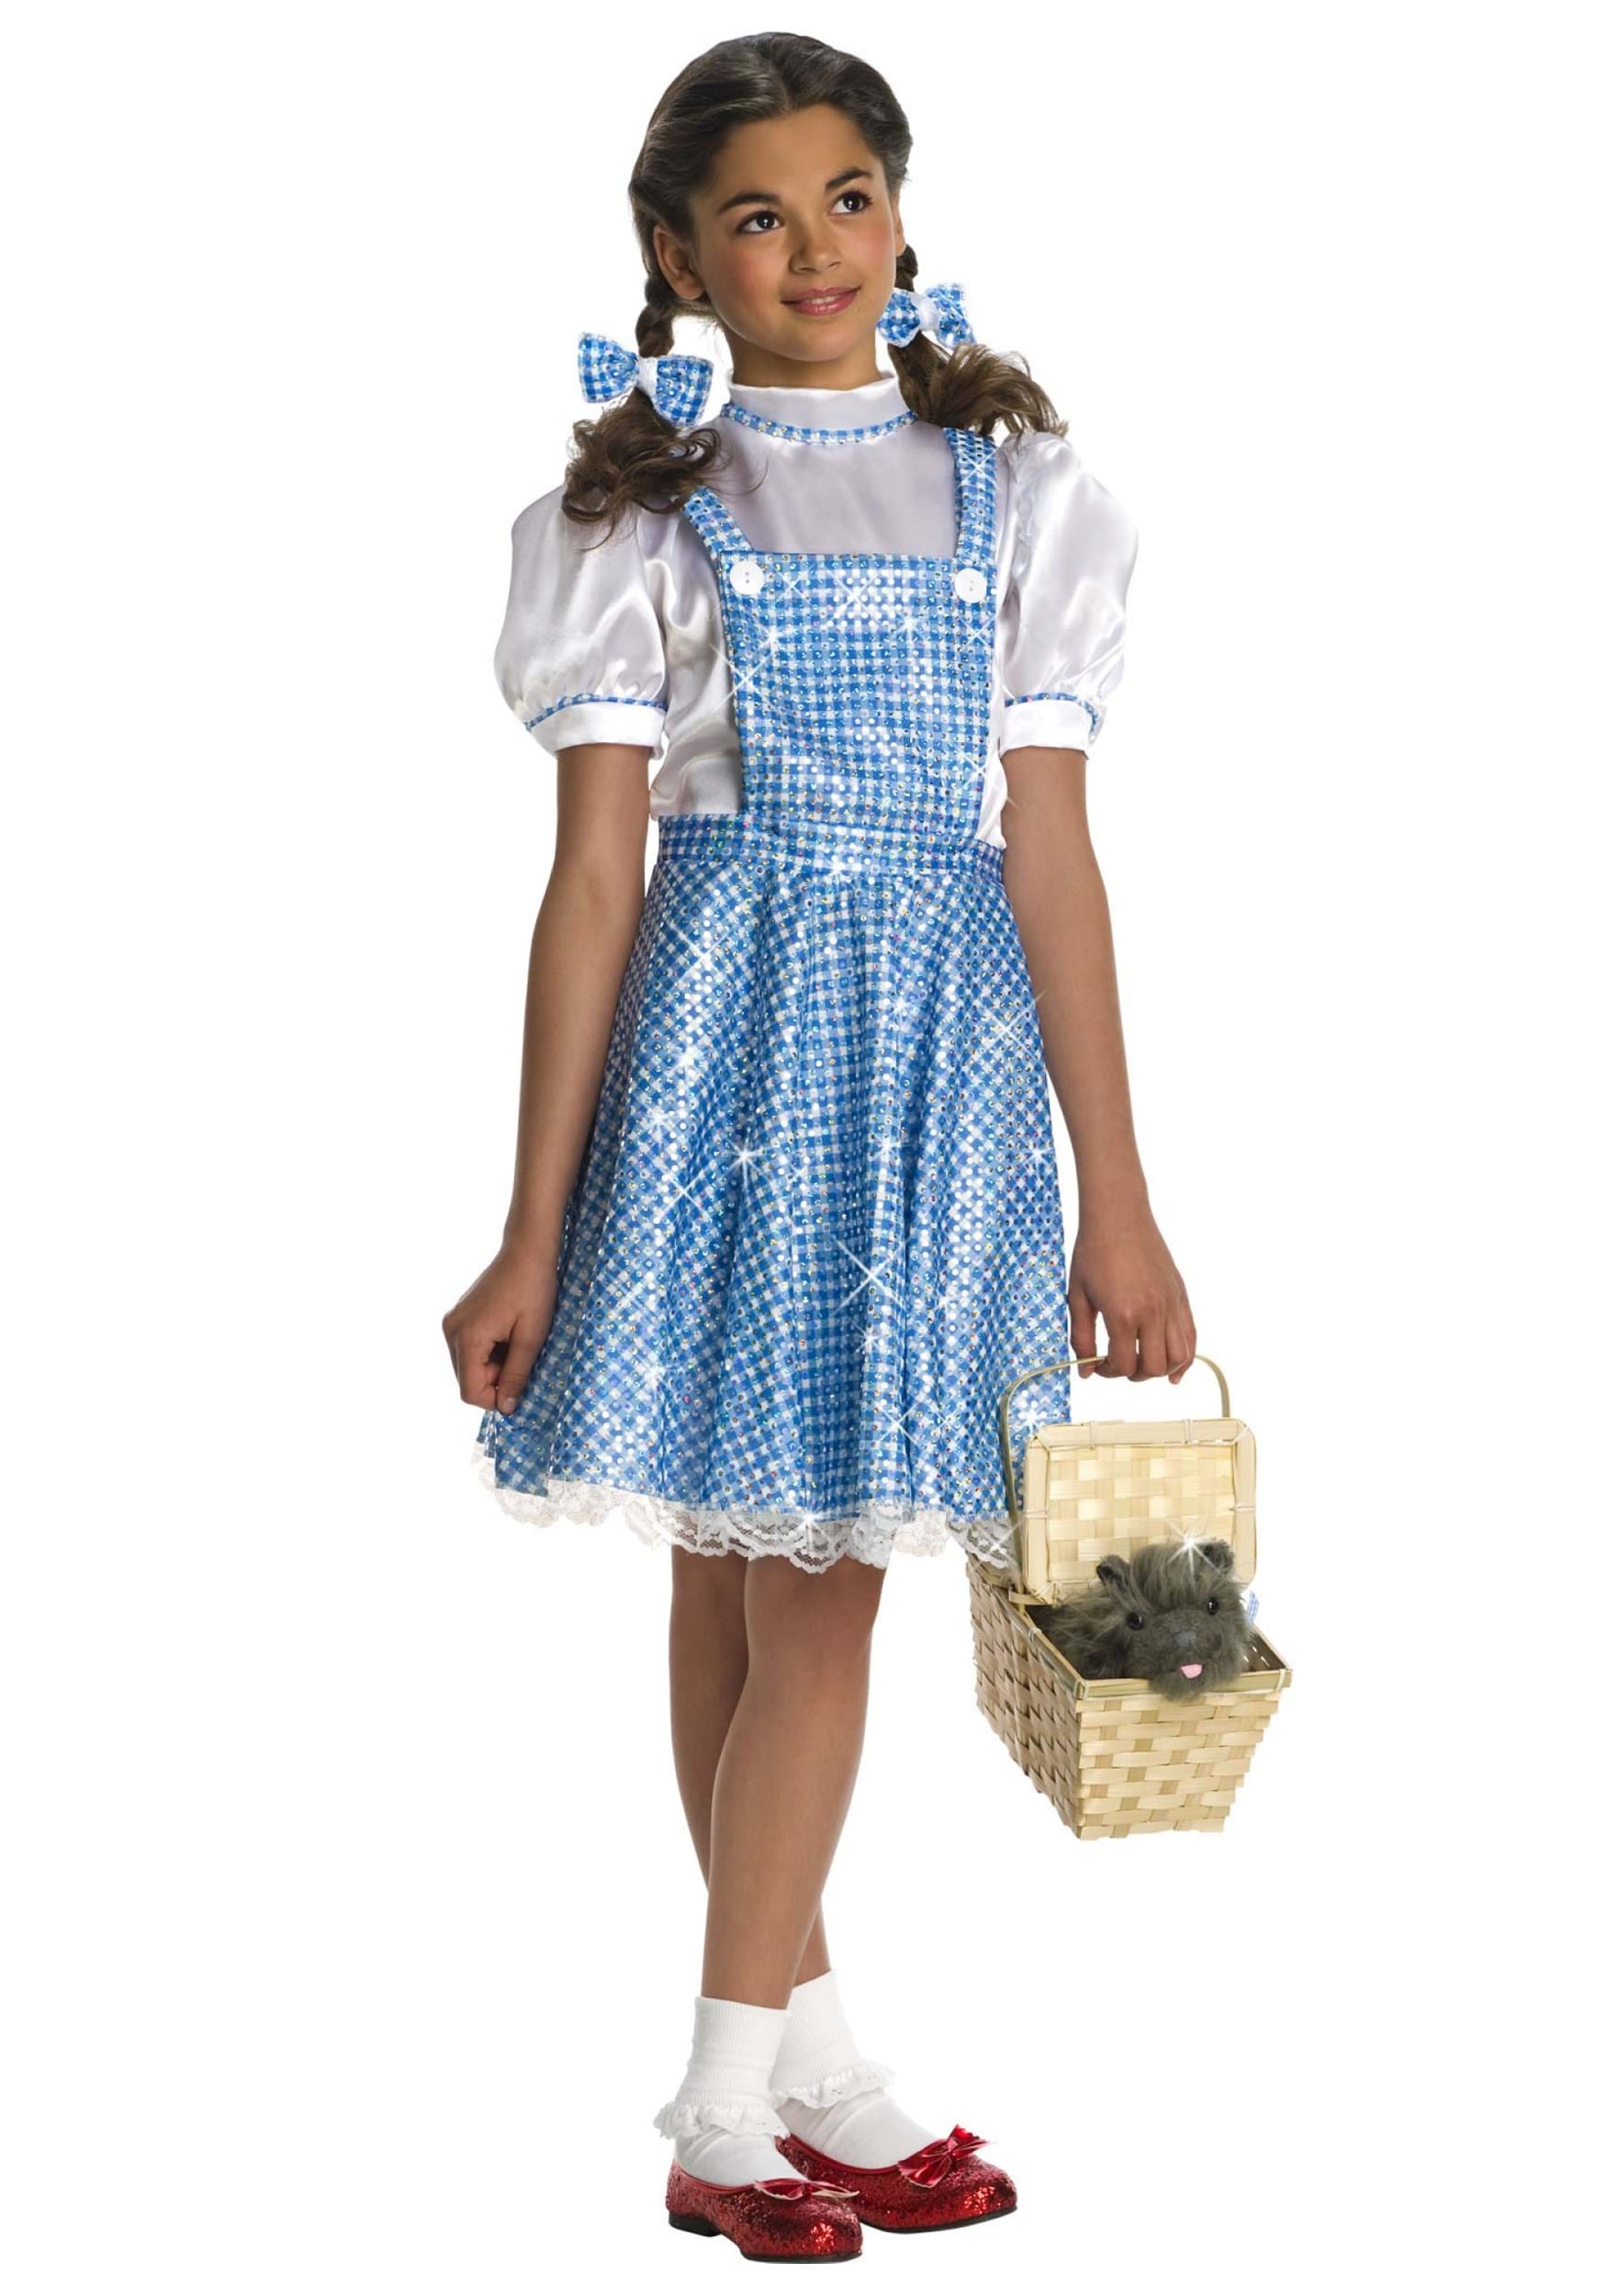 Sequin Dorothy Costume for Girls W/ Dress & Hair Ribbons